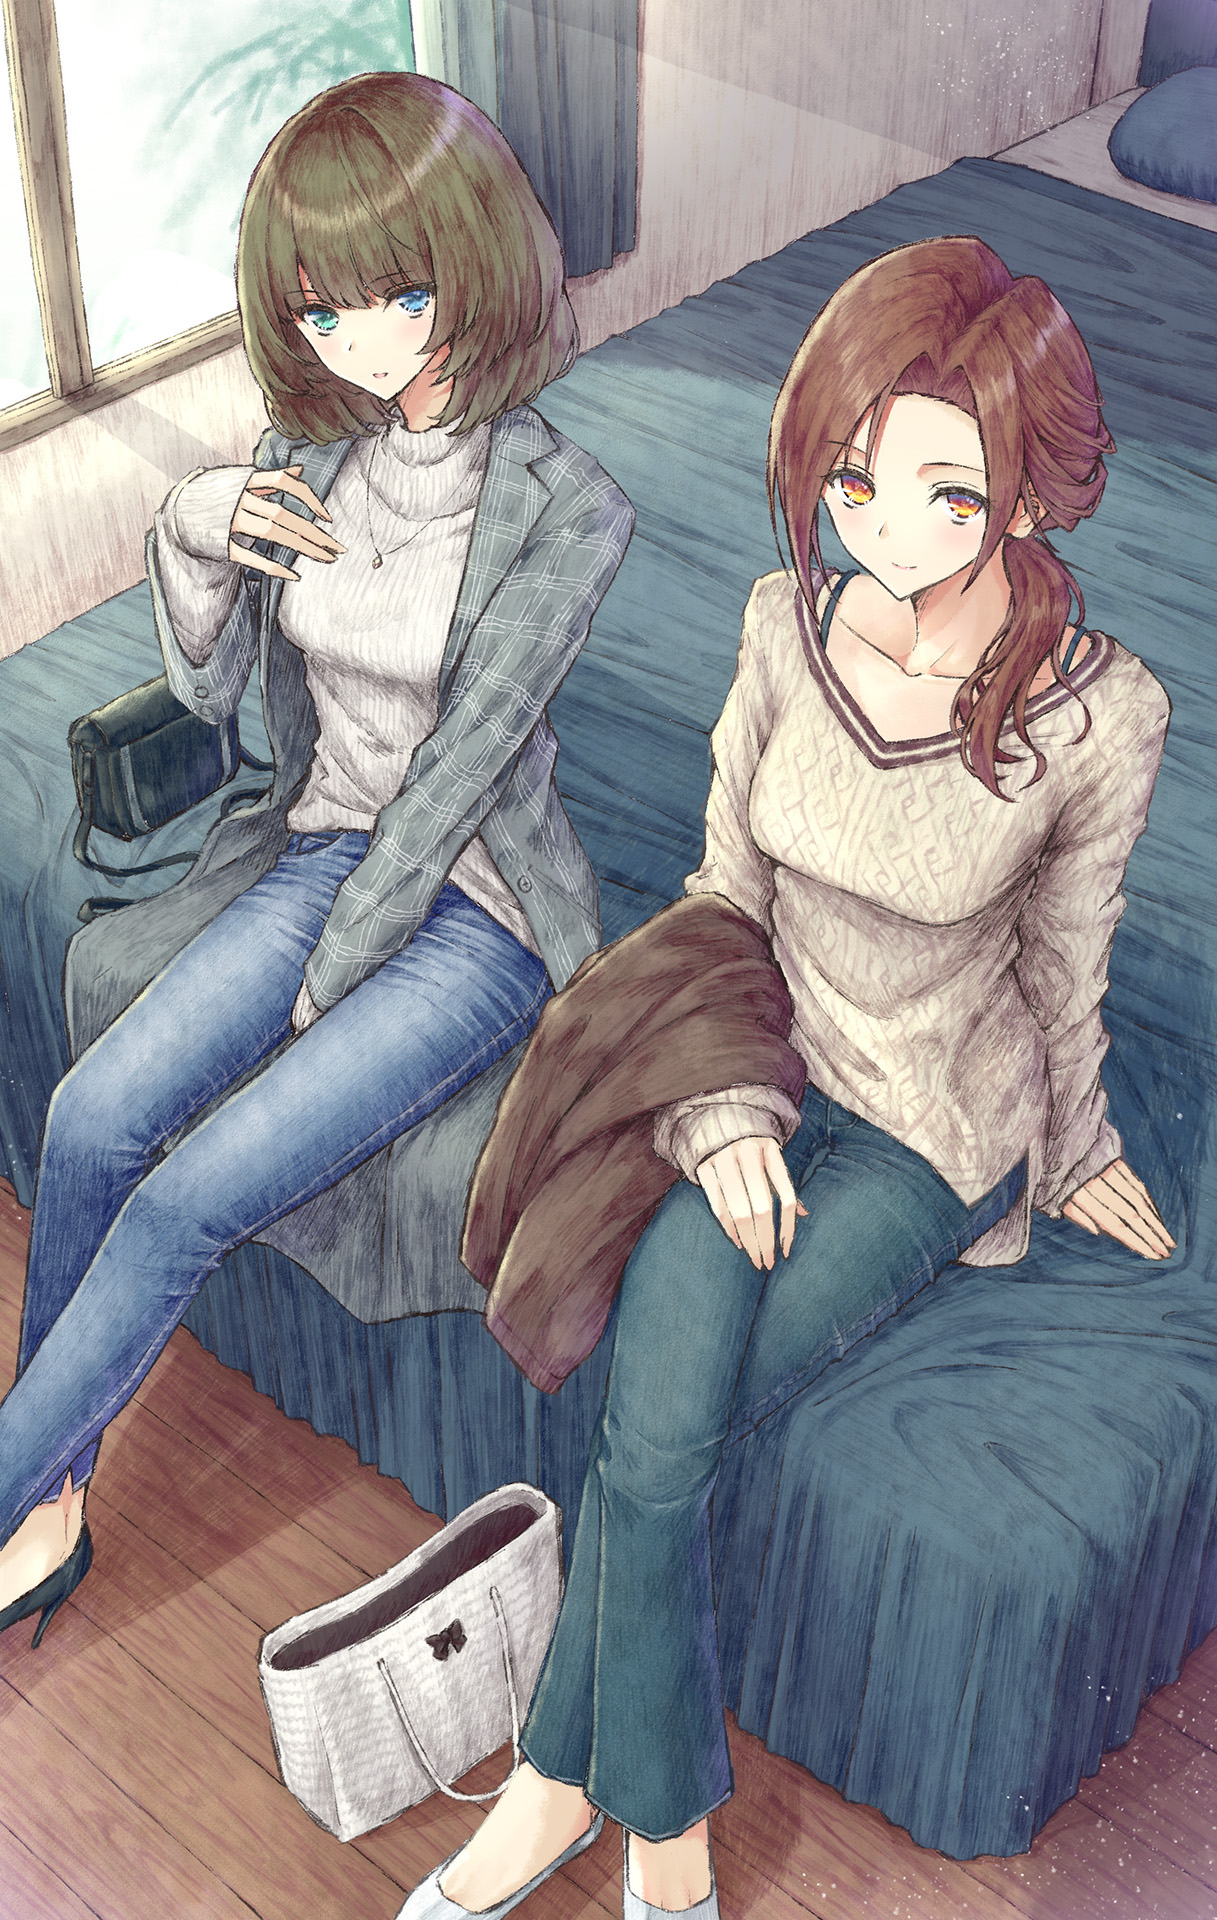 Anime 1217x1920 anime anime girls digital art artwork 2D portrait display THE iDOLM@STER Aramachi jeans sweater high angle